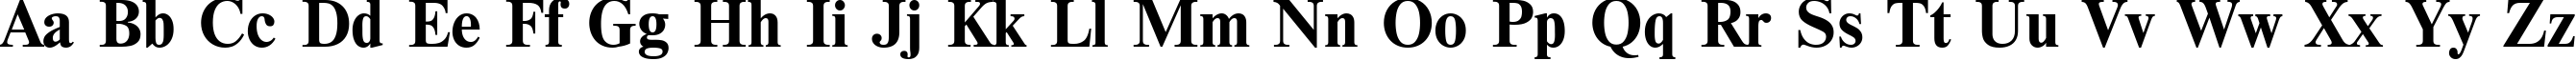 Пример написания английского алфавита шрифтом Newton Bold